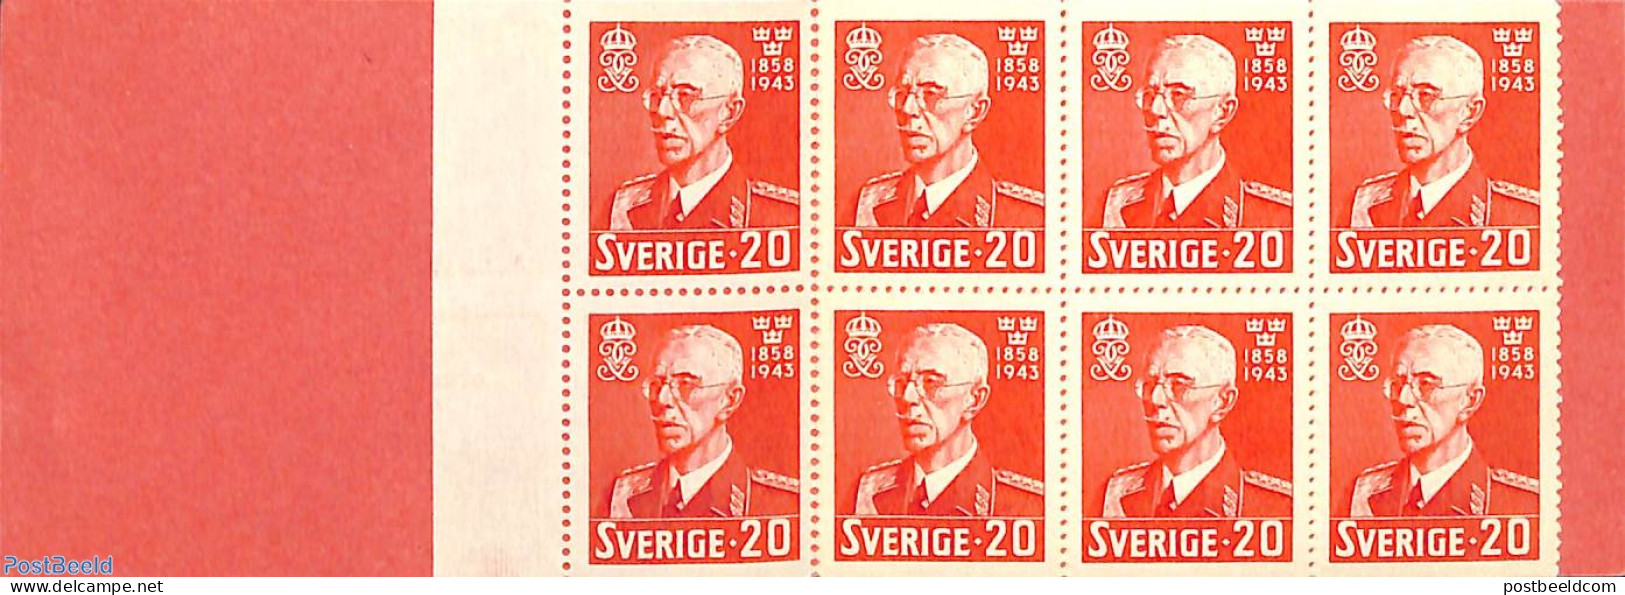 Sweden 1943 King Gustav V 85th Anniversary, Booklet, Mint NH, History - Kings & Queens (Royalty) - Stamp Booklets - Ongebruikt